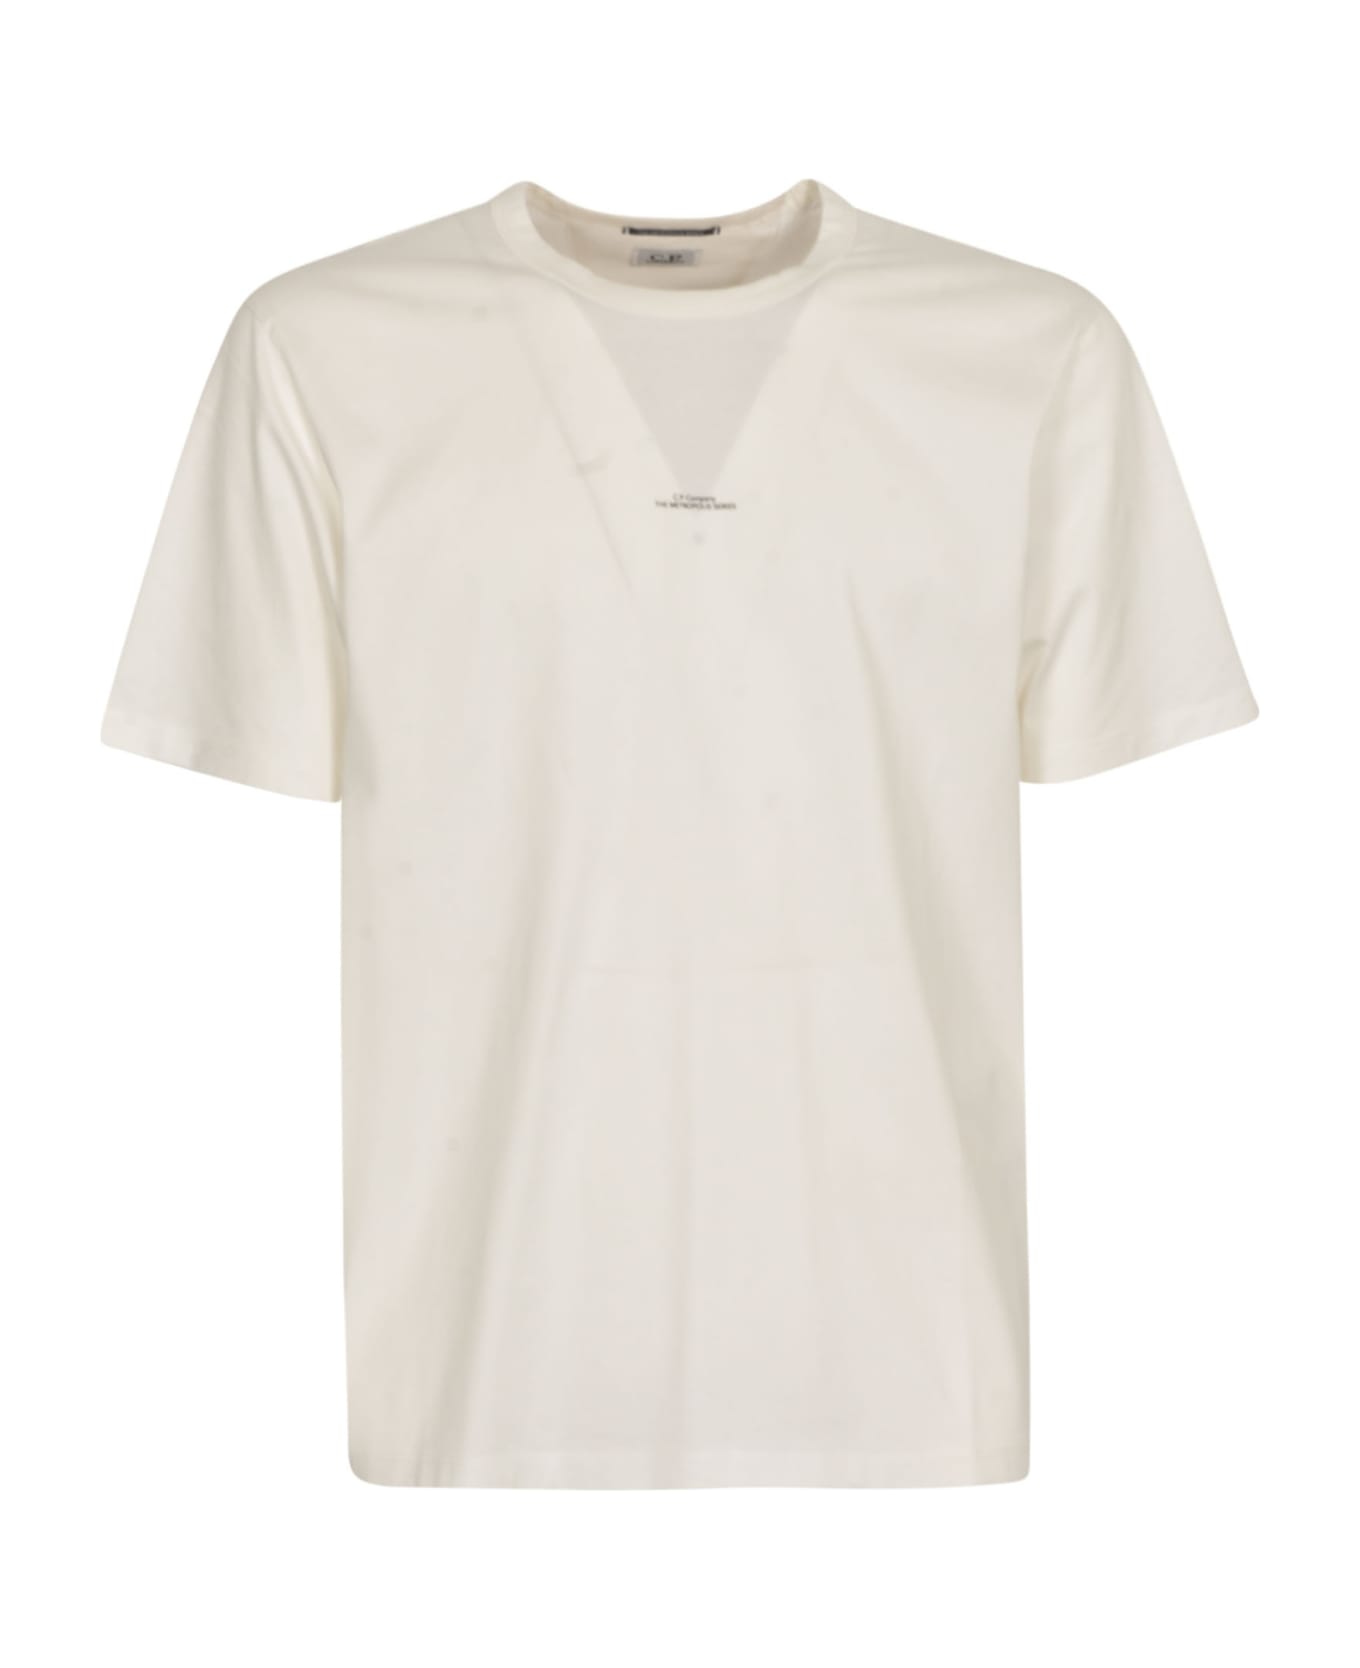 C.P. Company Logo Round Neck T-shirt - White